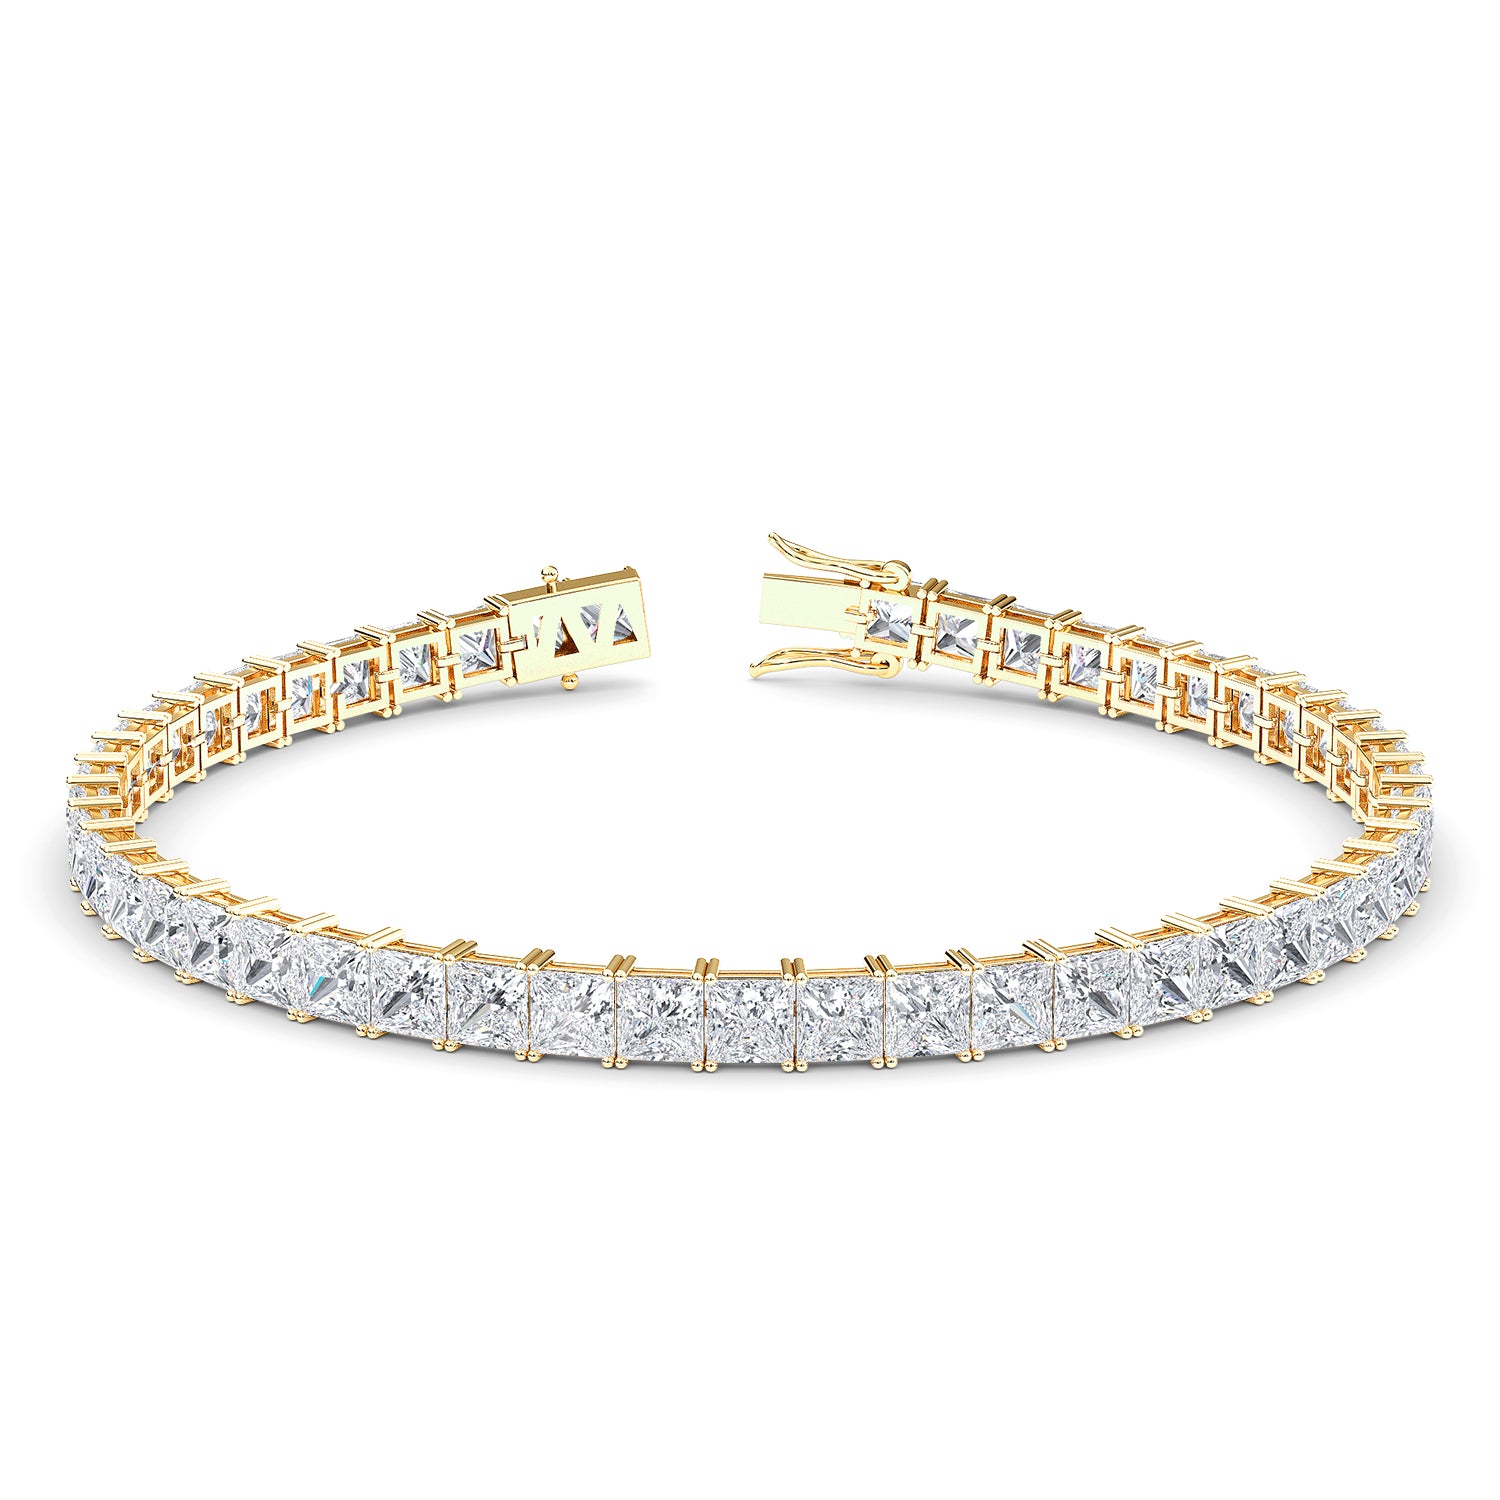 White Gold Tennis Bracelet - 10 carat Diamonds